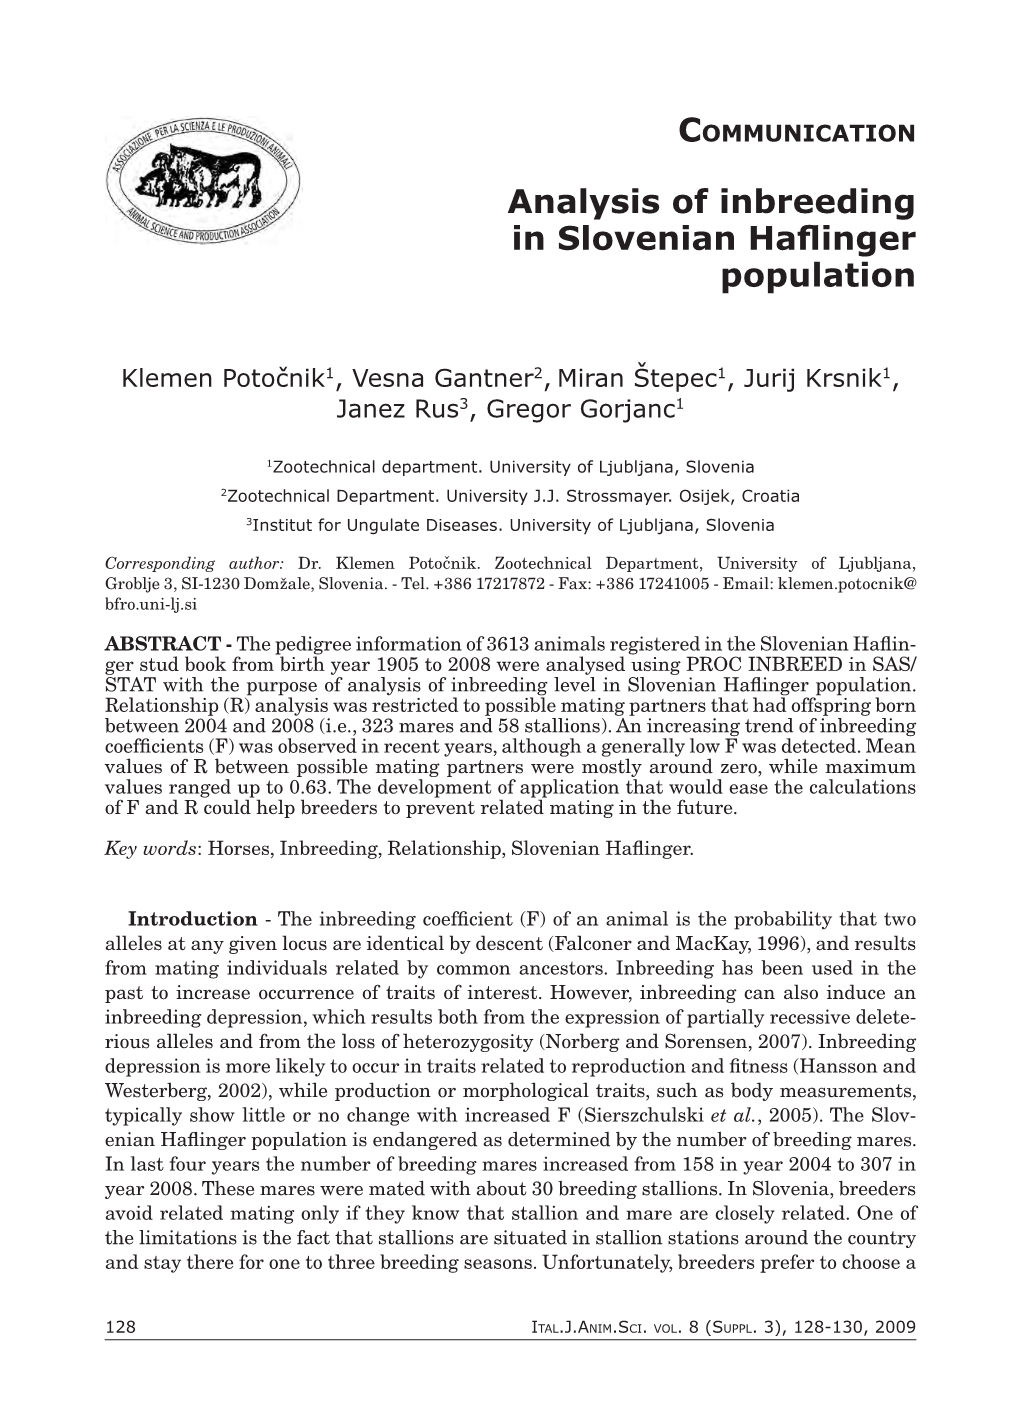 Analysis of Inbreeding in Slovenian Haflinger Population